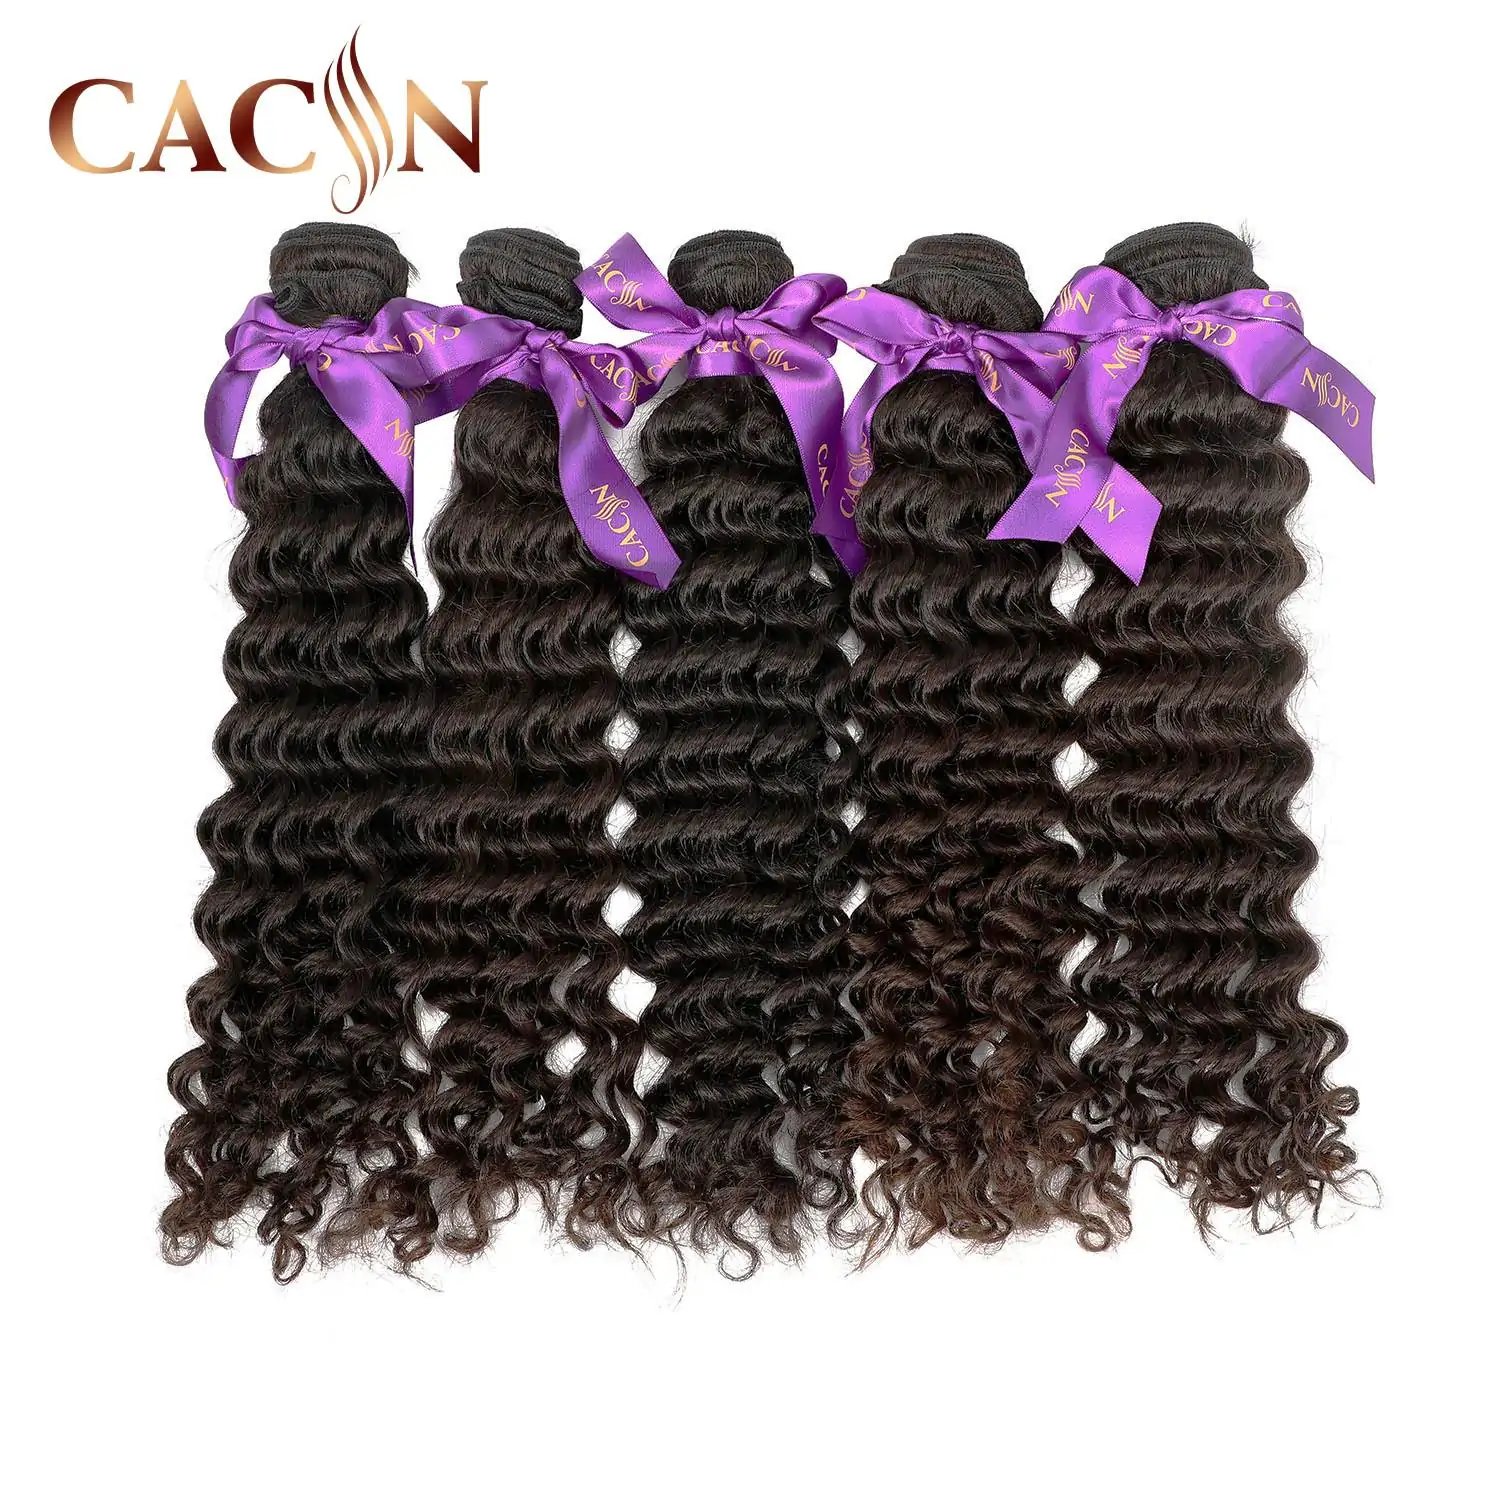 Indian deep curly raw hair bundles 1pcs, best quality cheap price human hair bundles, free shipping